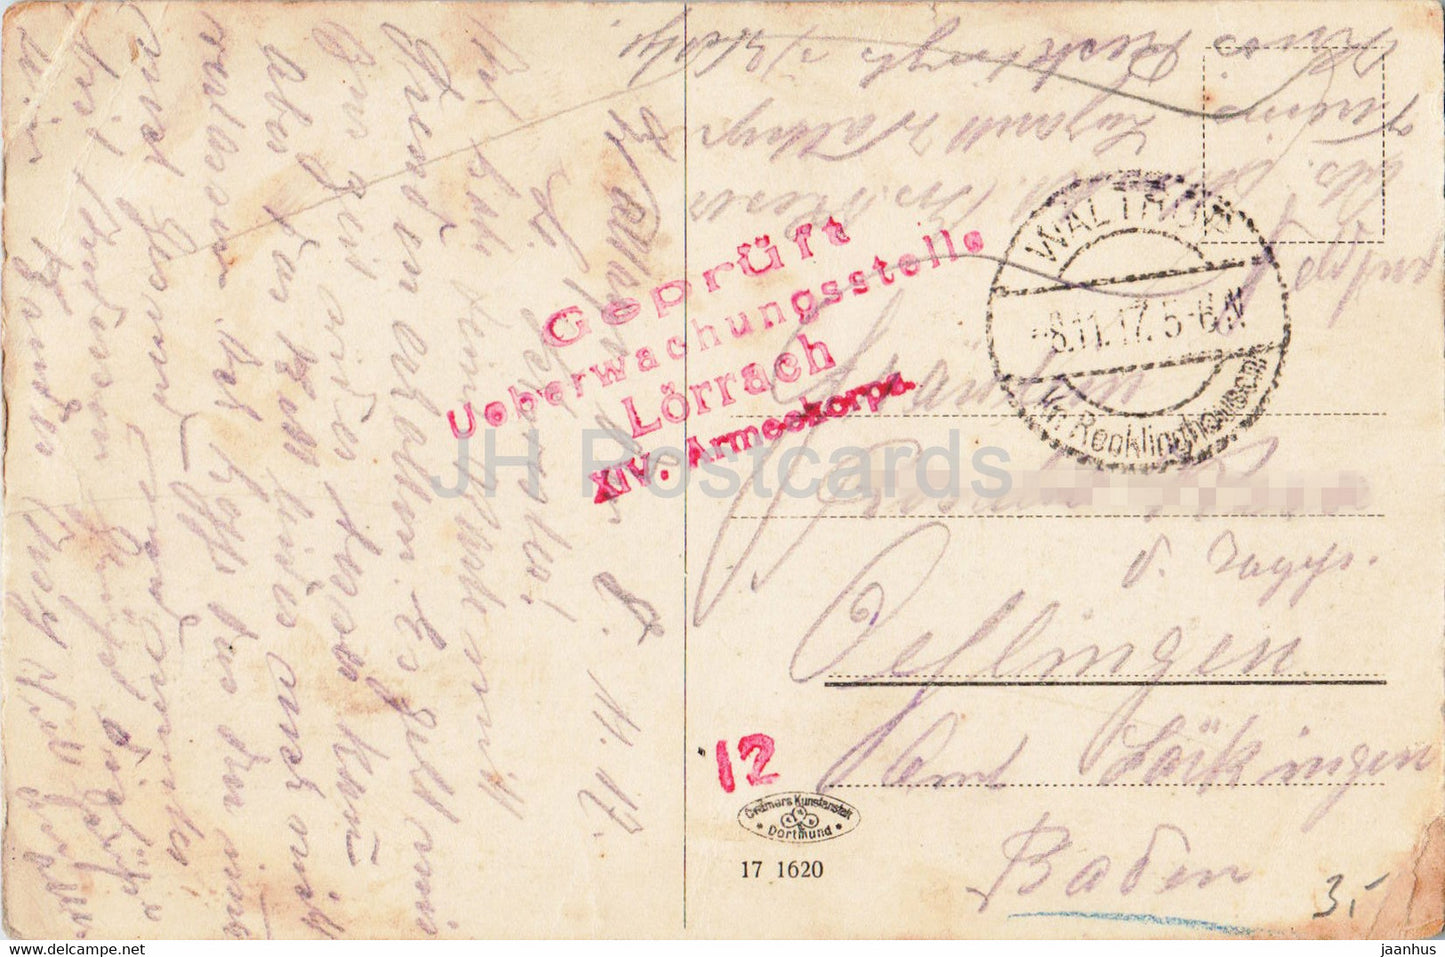 Henrichenburg - Neue Schleuse - Feldpost - XIV Armeekorps - 1917 - carte postale ancienne - Allemagne - utilisé